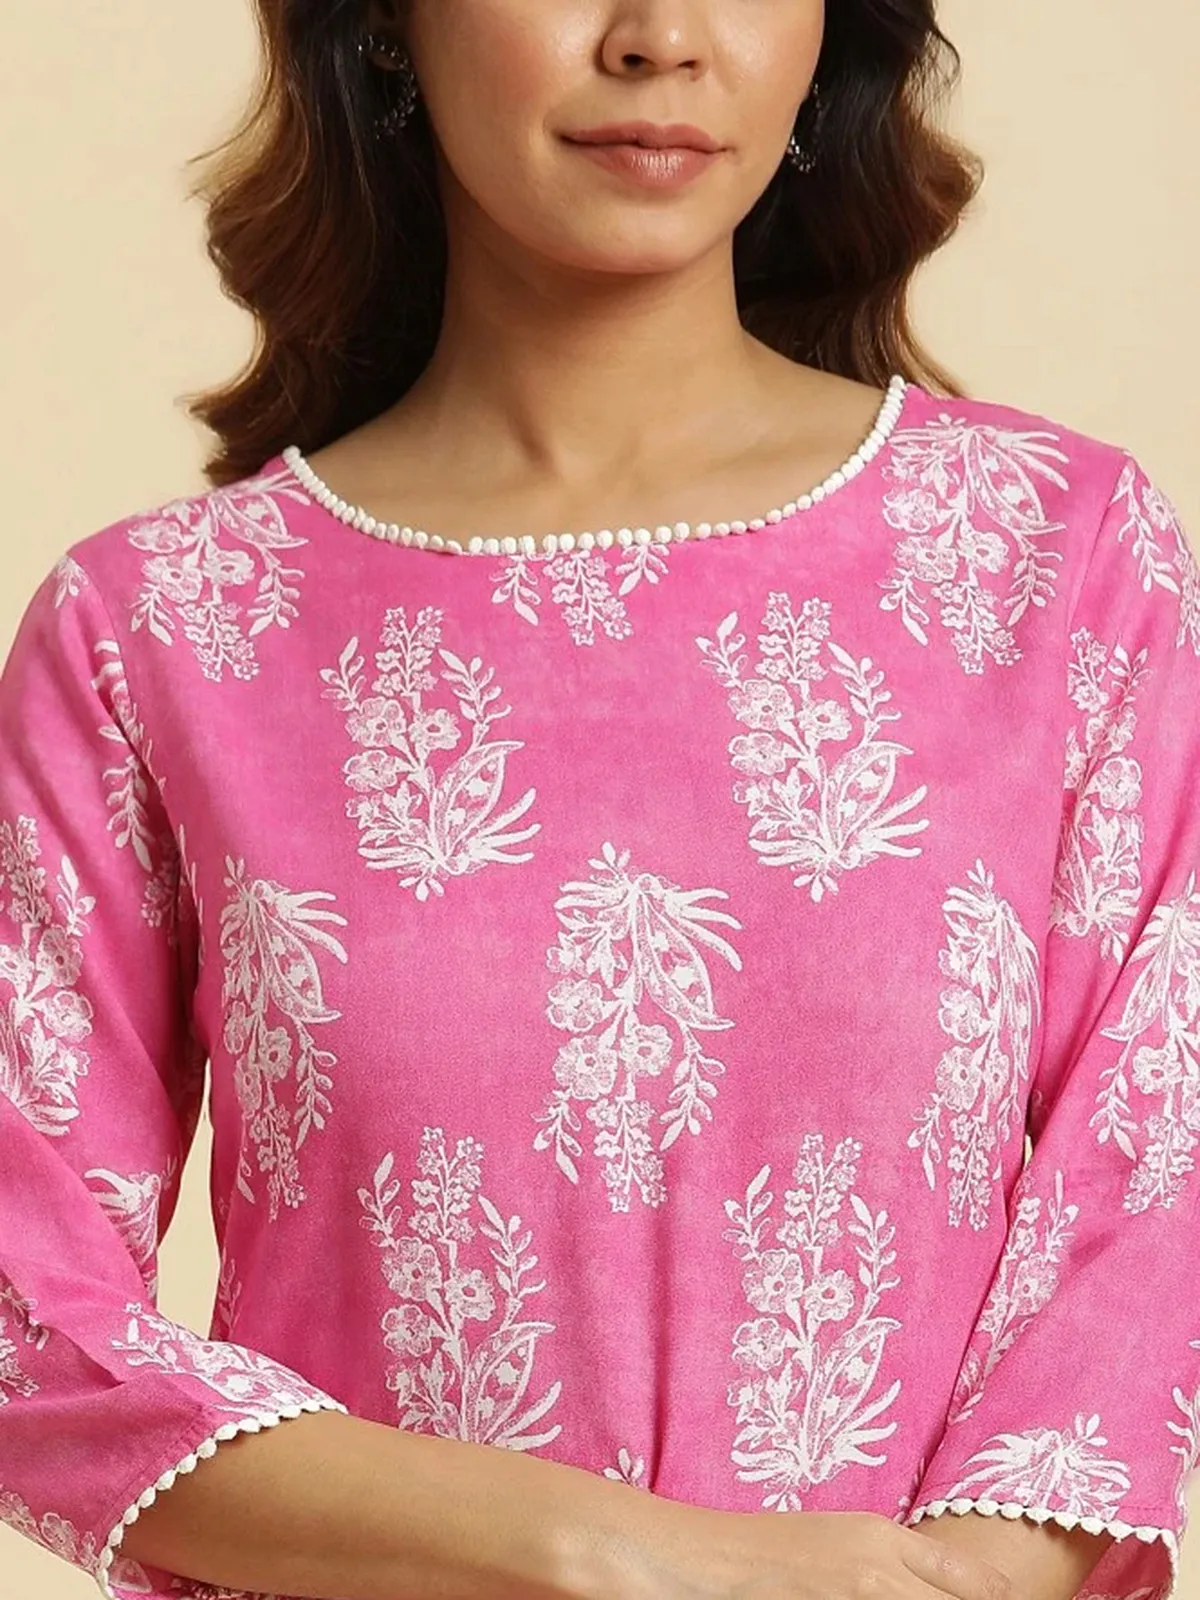 W cotton printed pink kurti